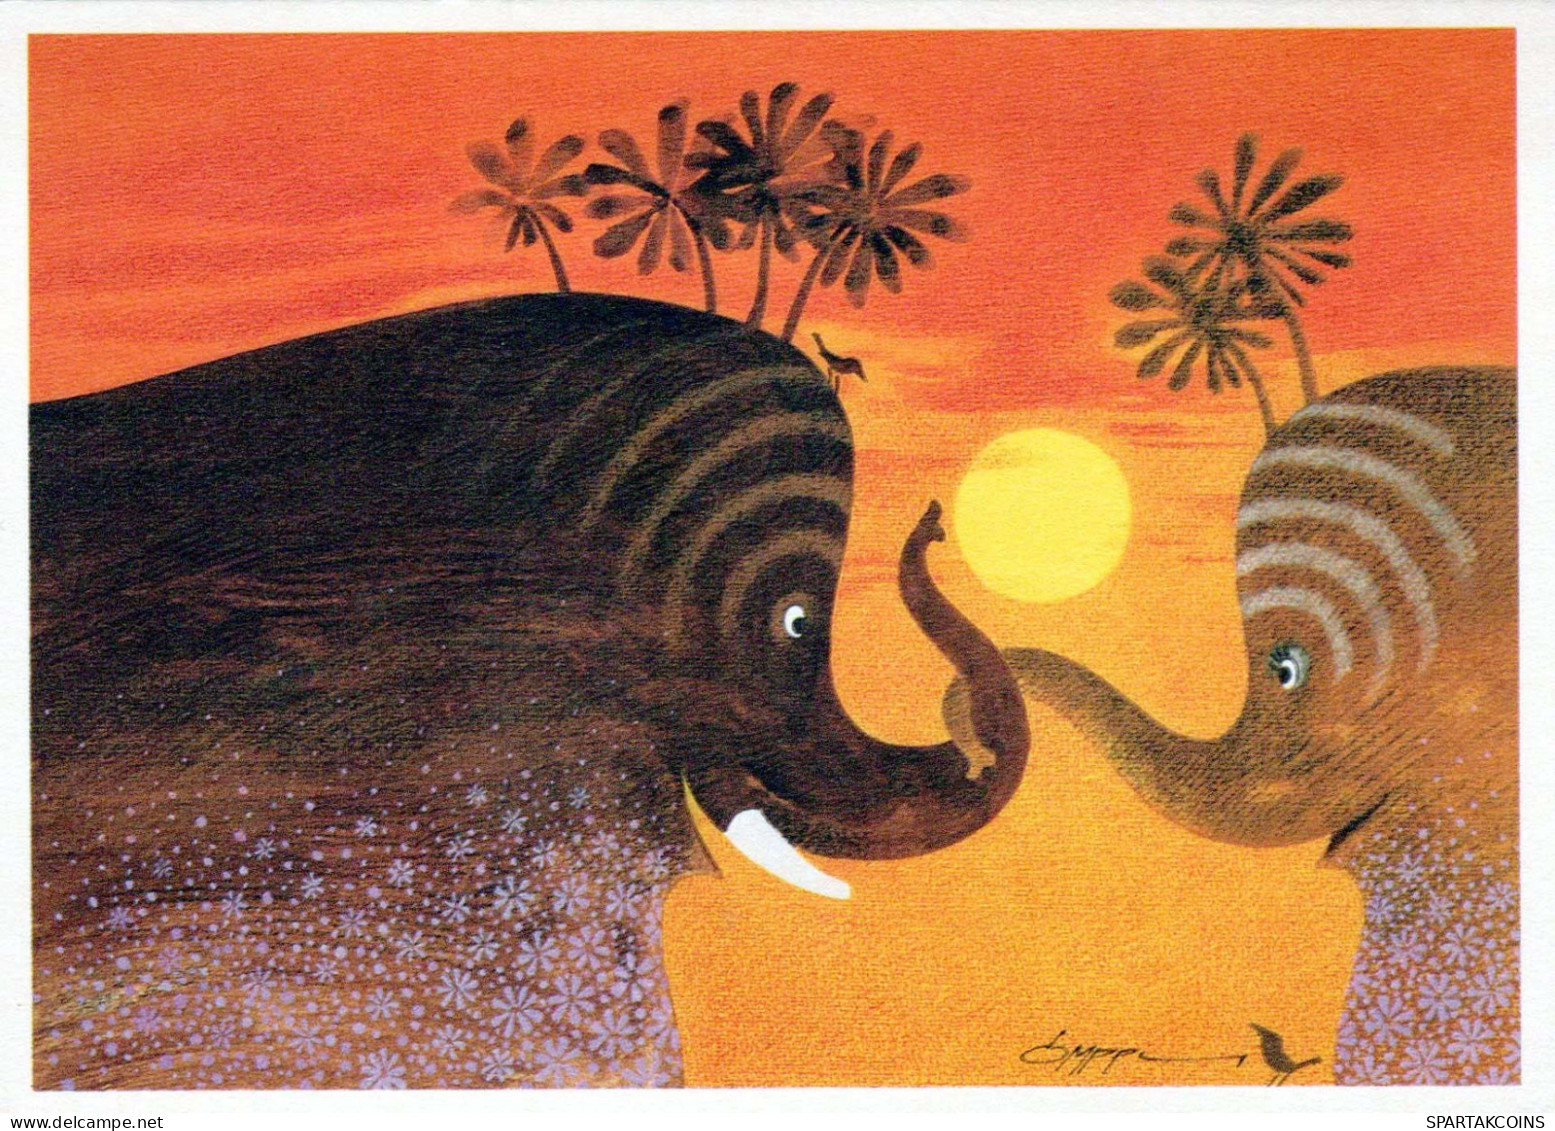 ELEFANT Tier Vintage Ansichtskarte Postkarte CPSM #PBS764.A - Elefanti